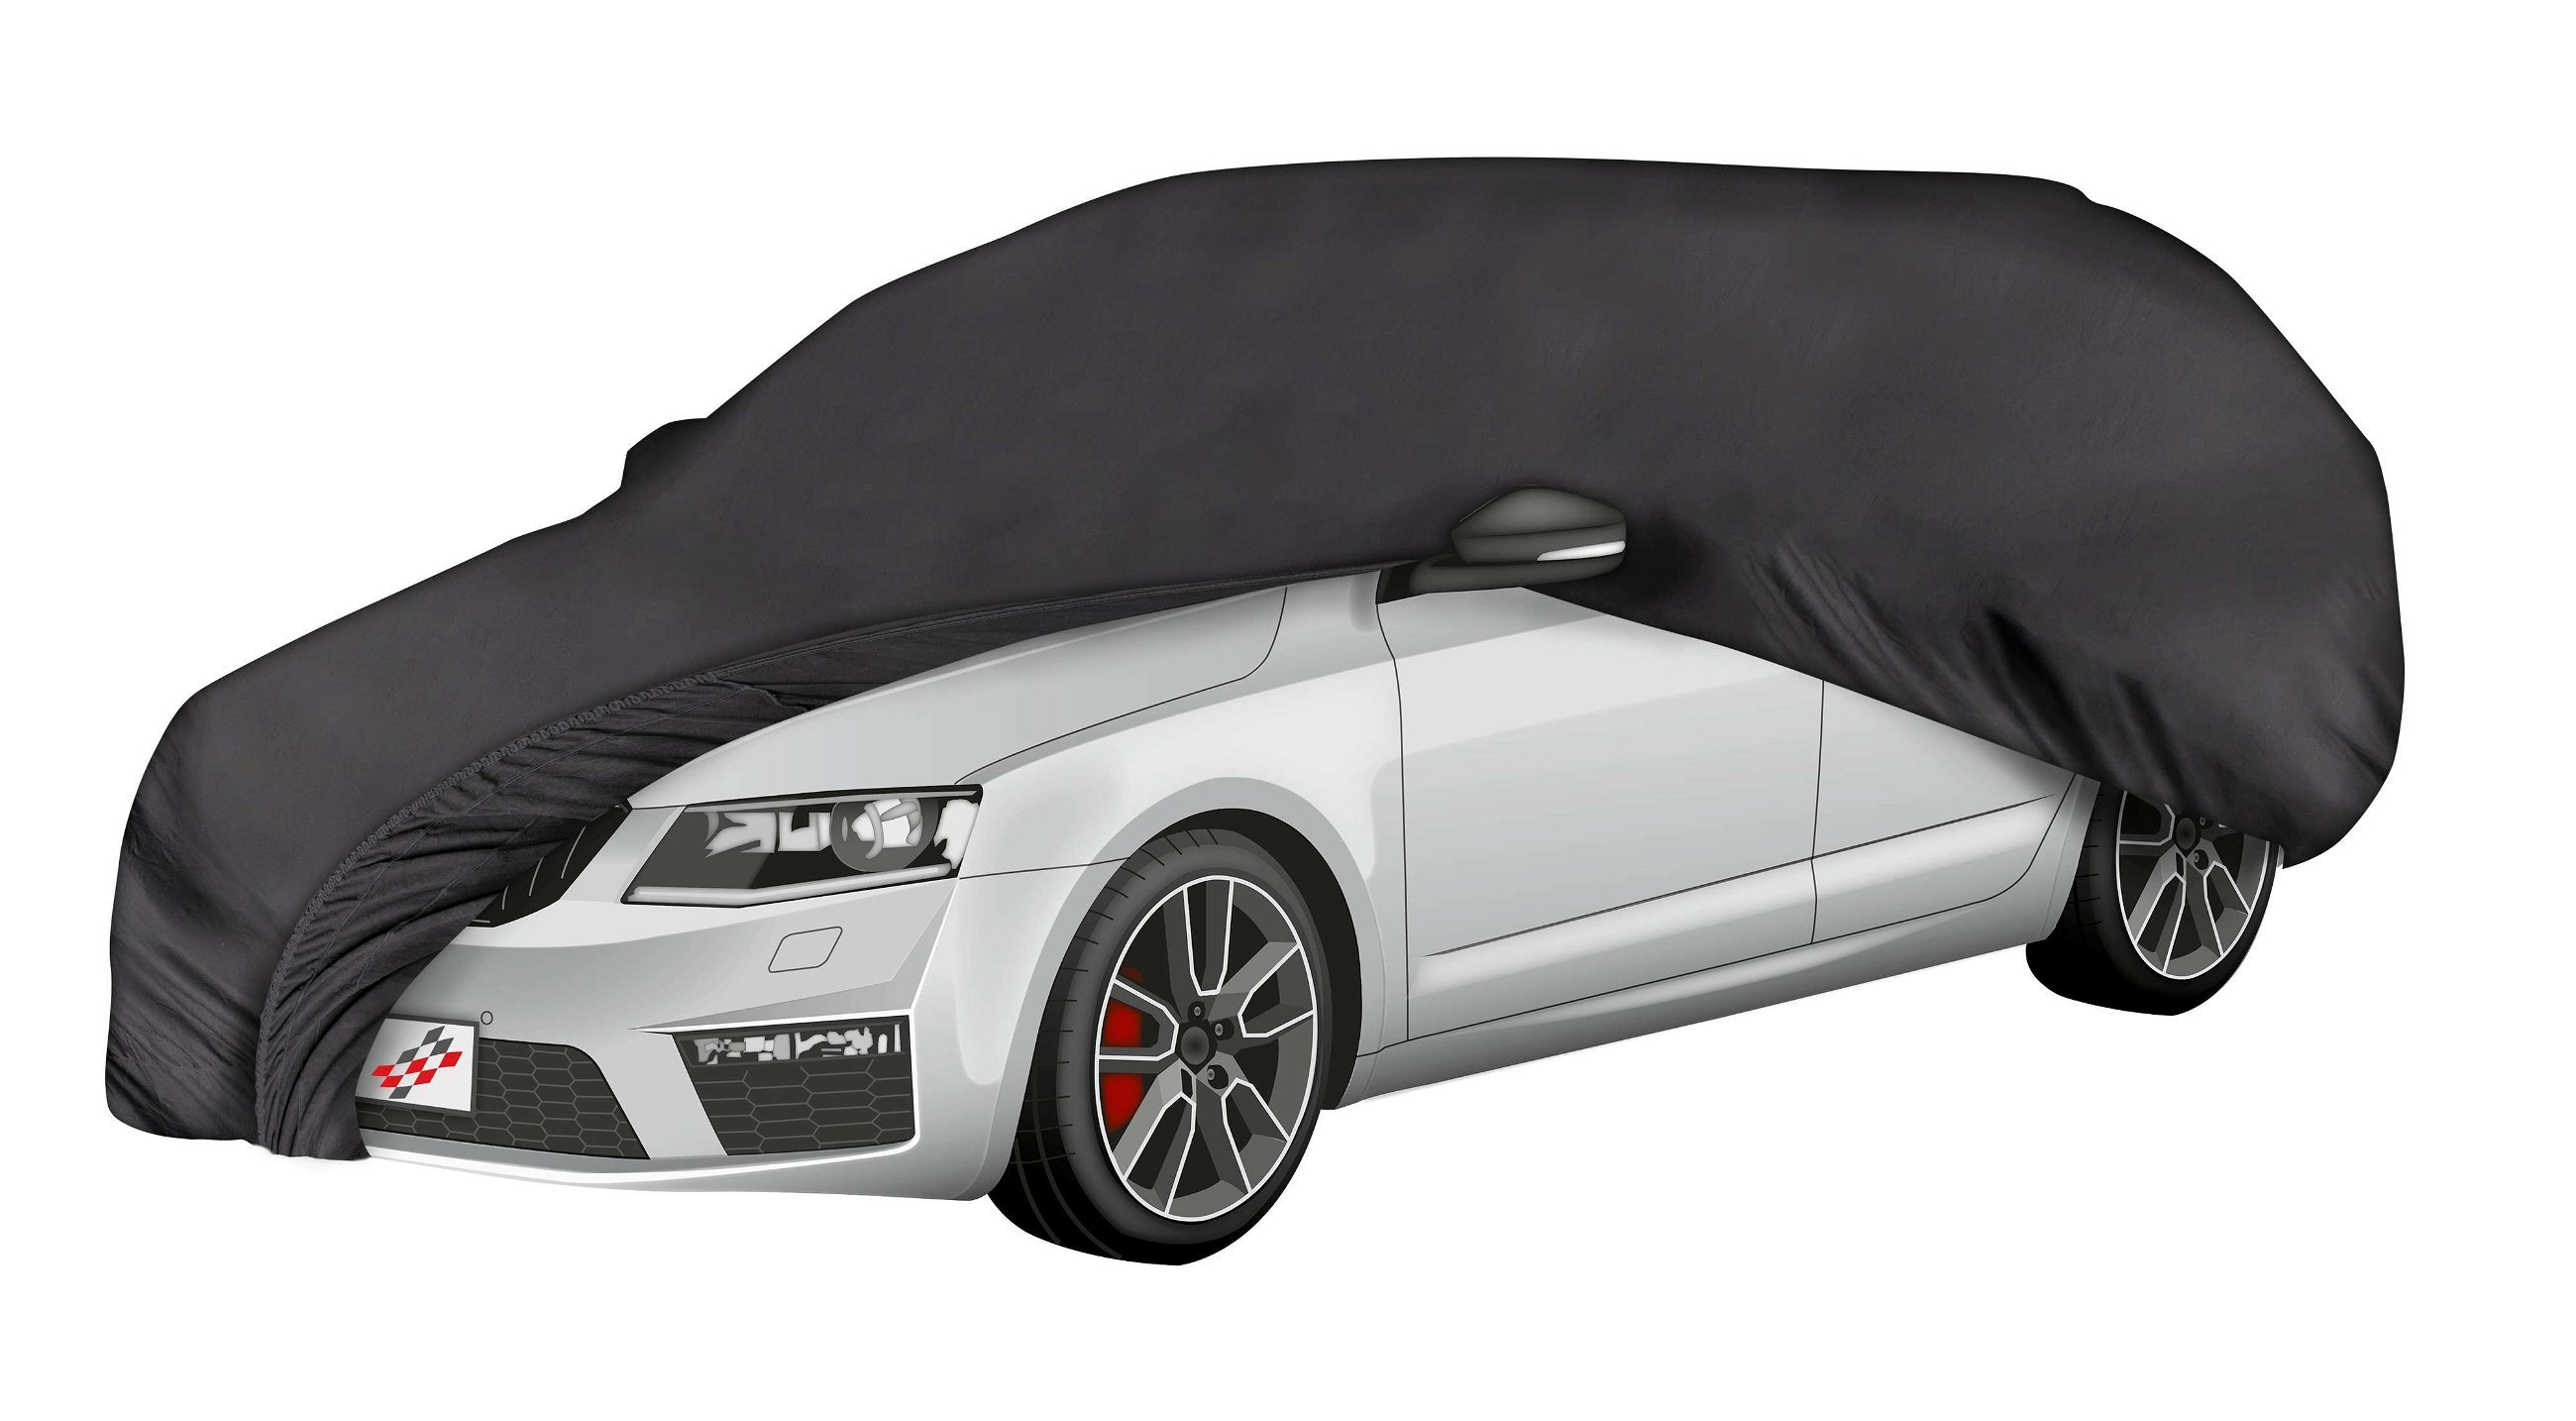 Car tarpaulin Indoor Soft SUV size S black